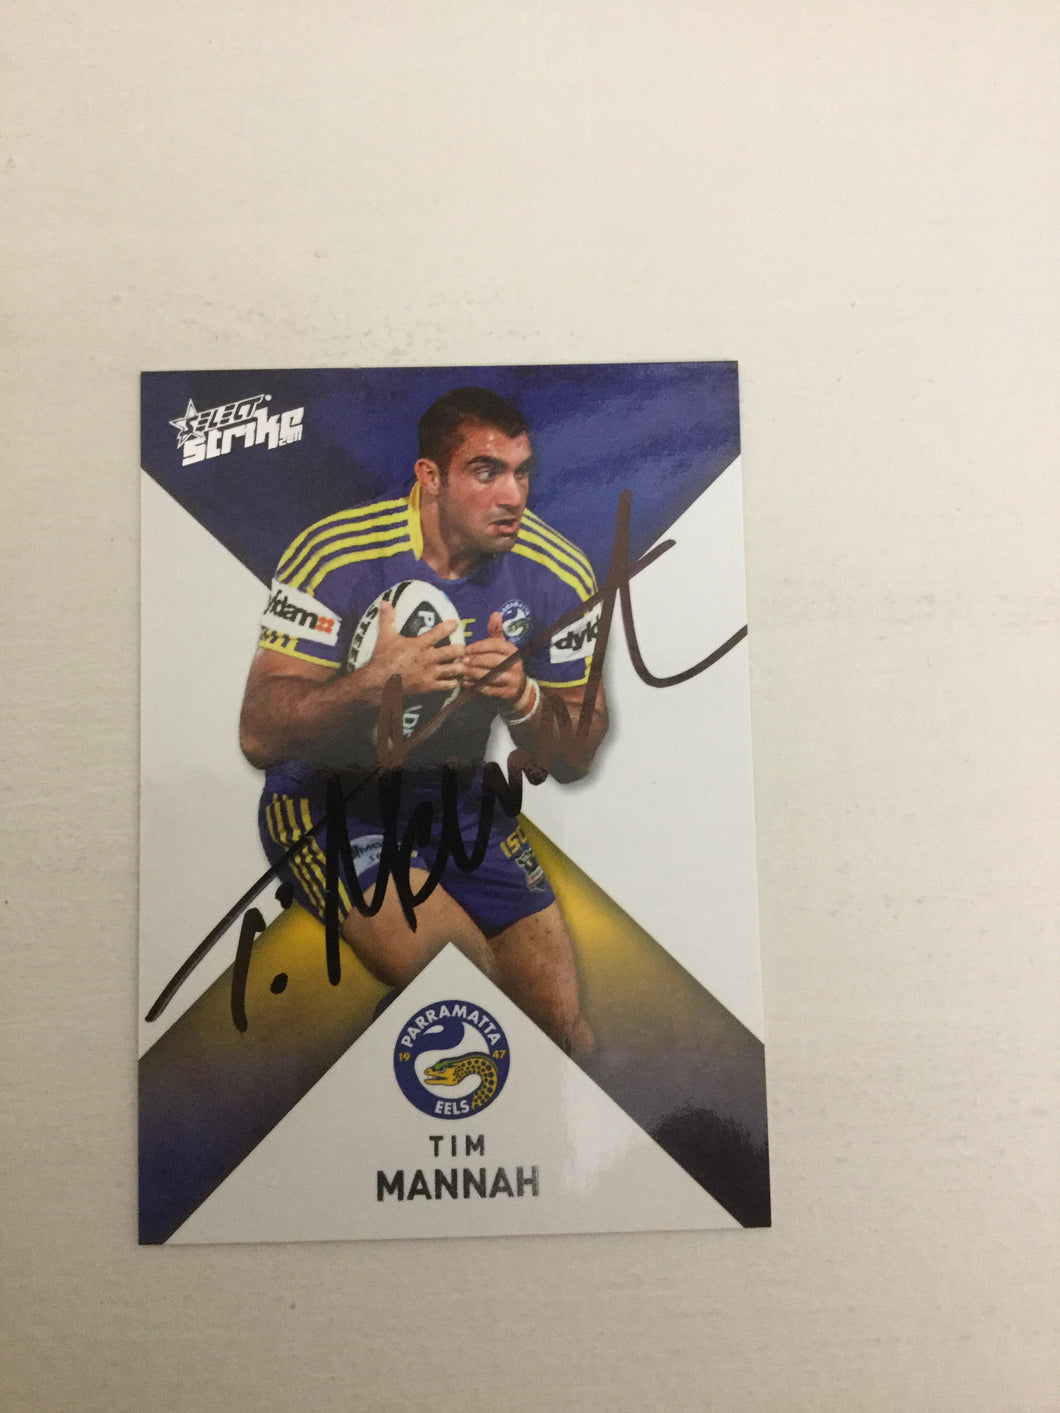 2011 Select Strike Tim Mannah Parramatta Eels Personally Signed Card